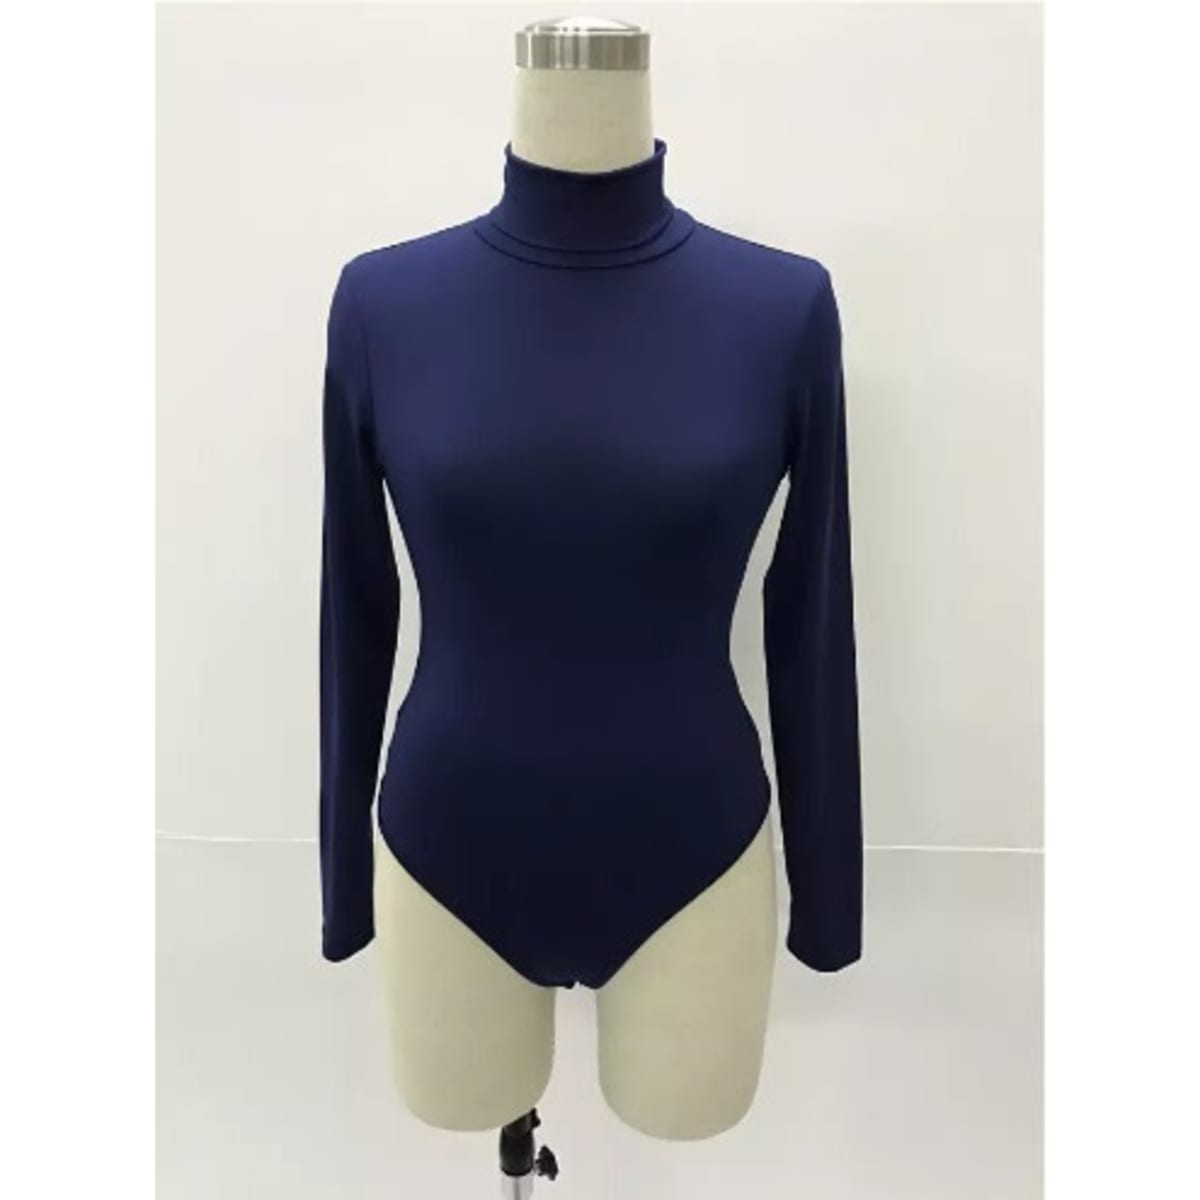 Lycra Turtle Neck Body Suit For Women - Navy Blue